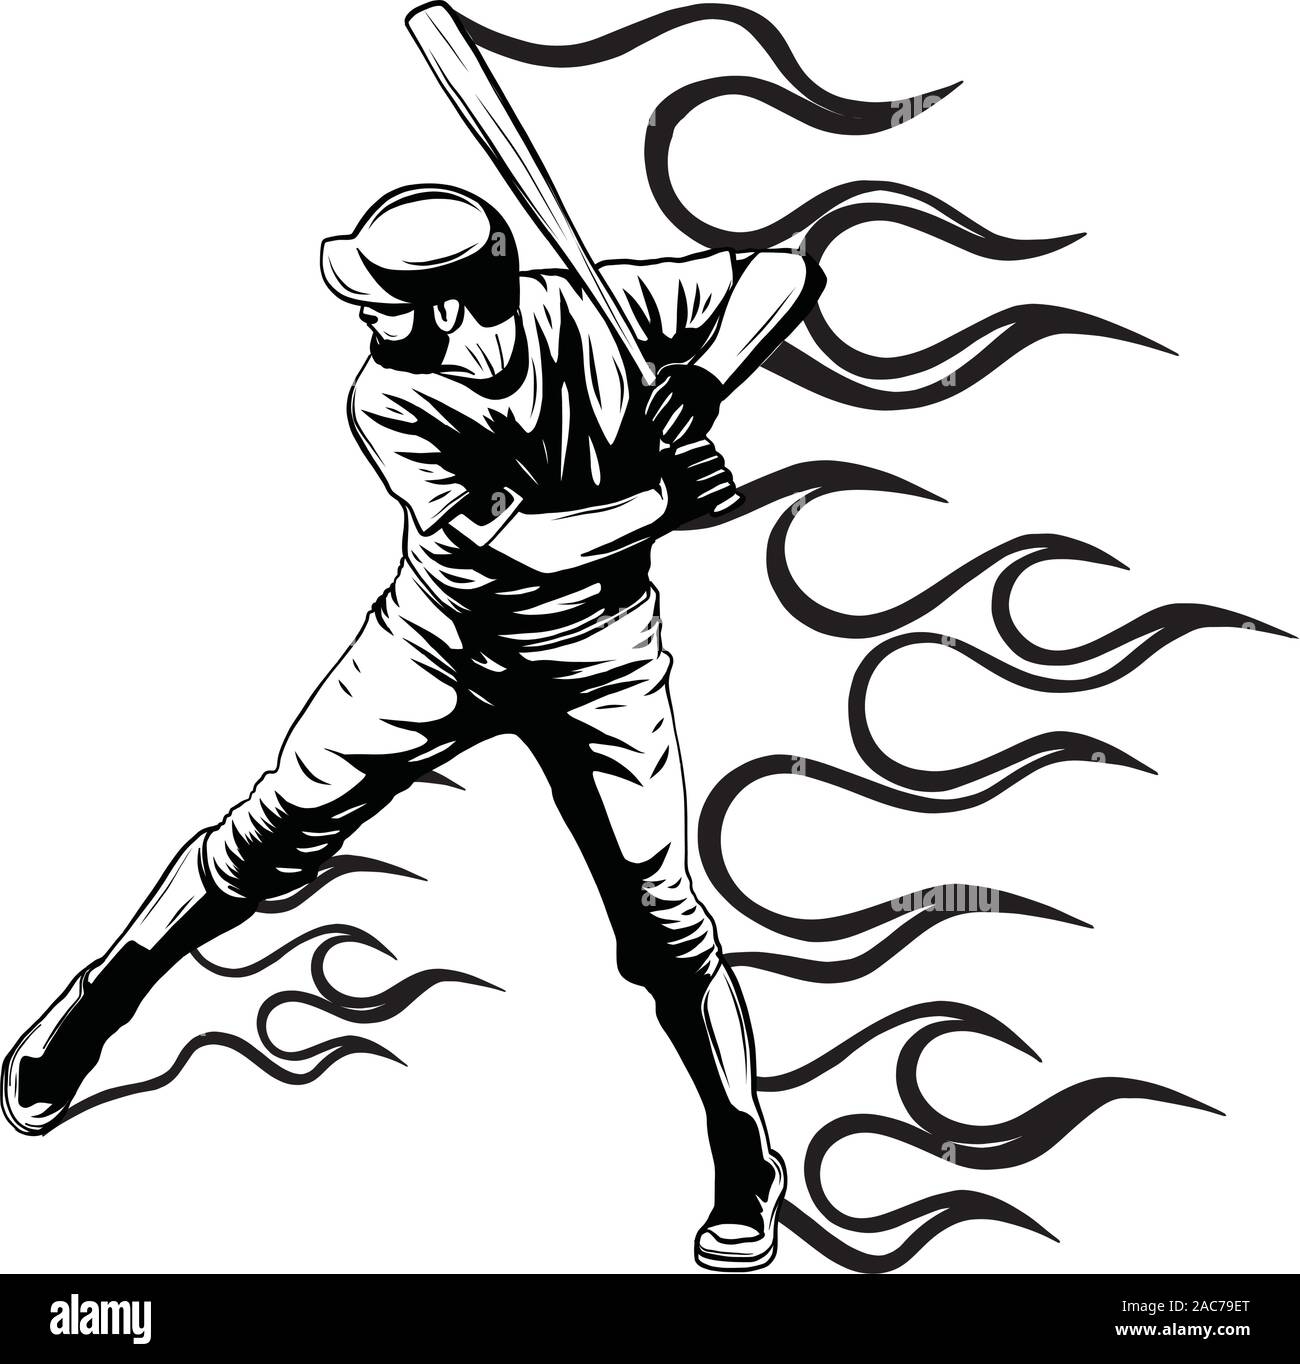 Baseball player vector illustration, batter swinging bat, hits ball Stock Vector